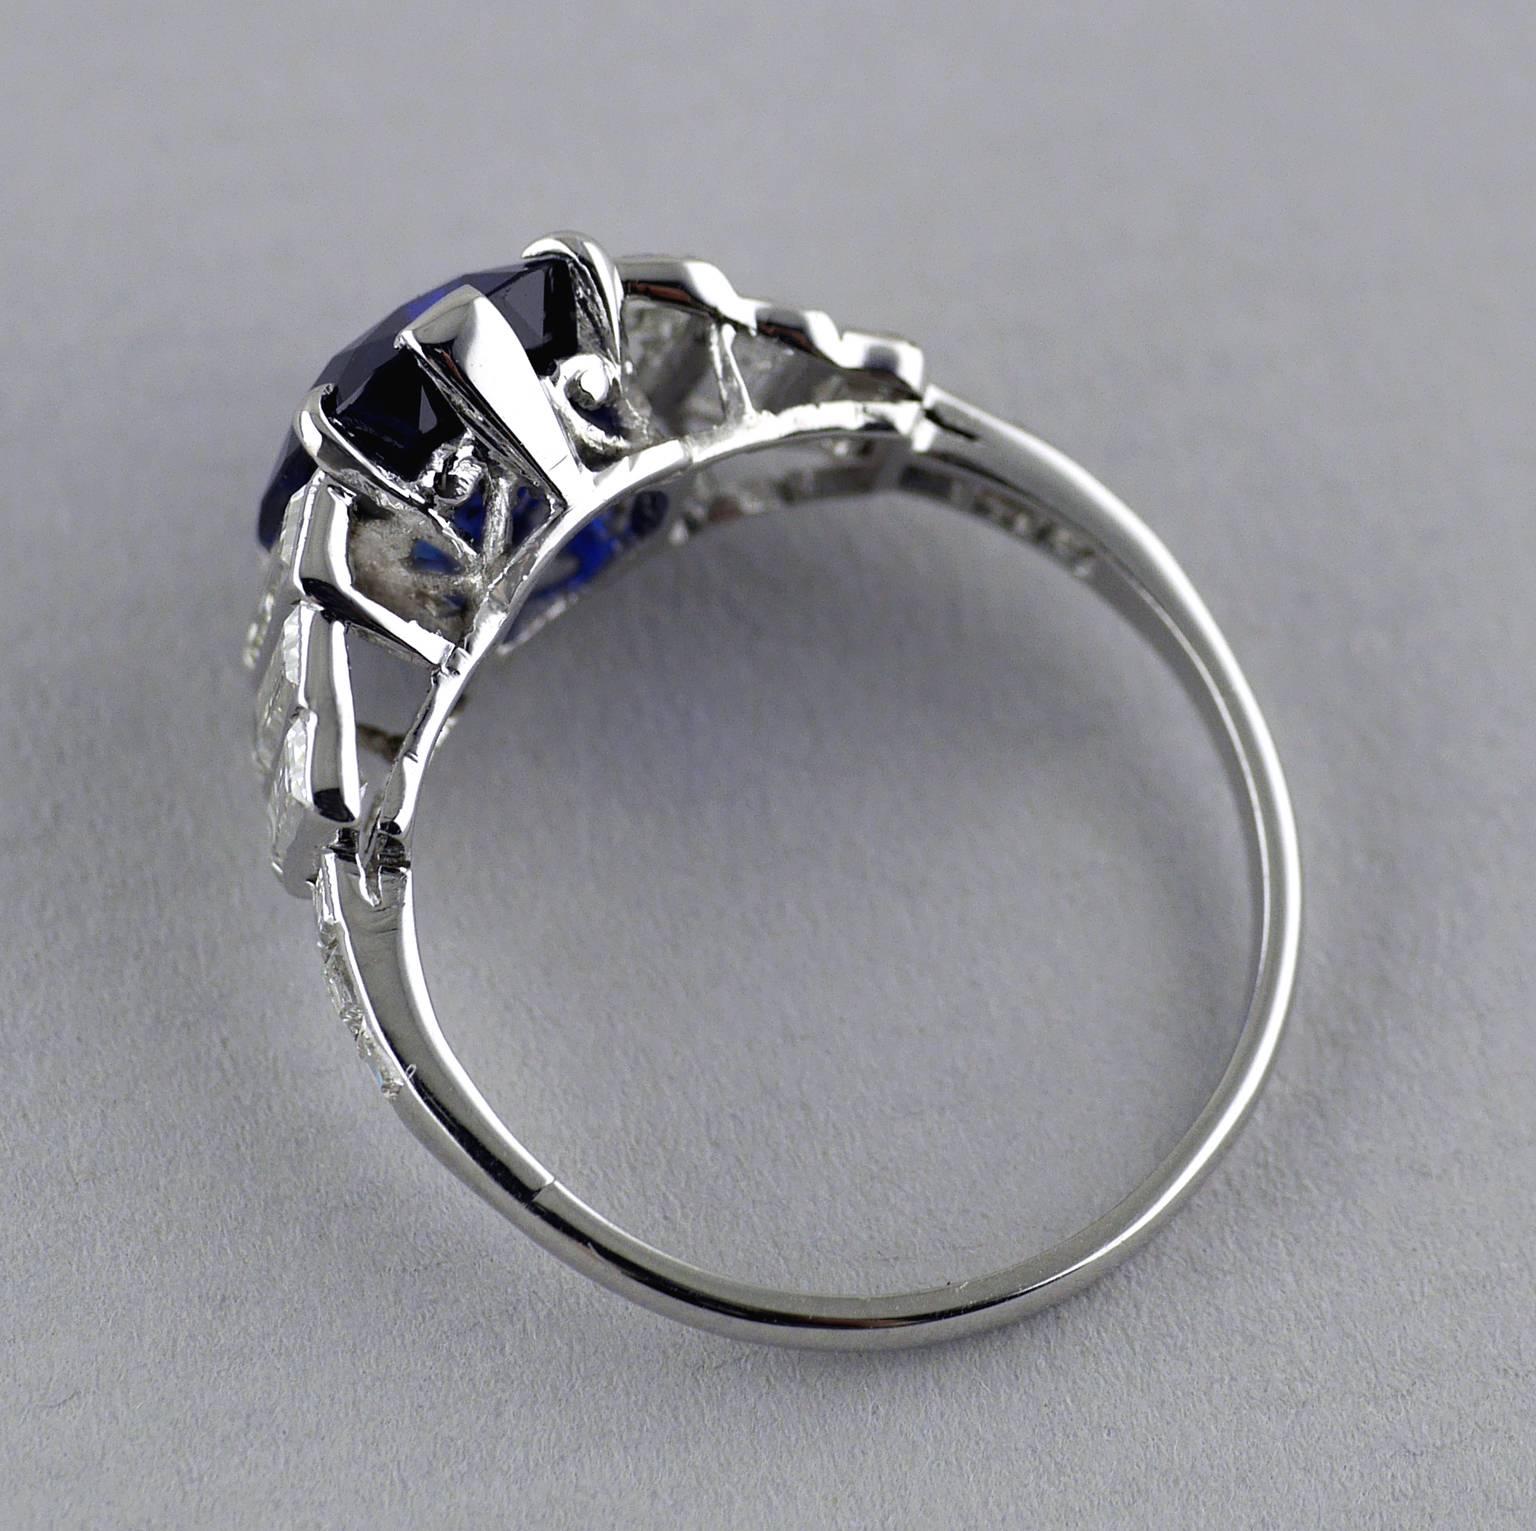 Women's 2.99 carat Cushion Cut Certified Untreated Sapphire Platinum Art Deco Ring